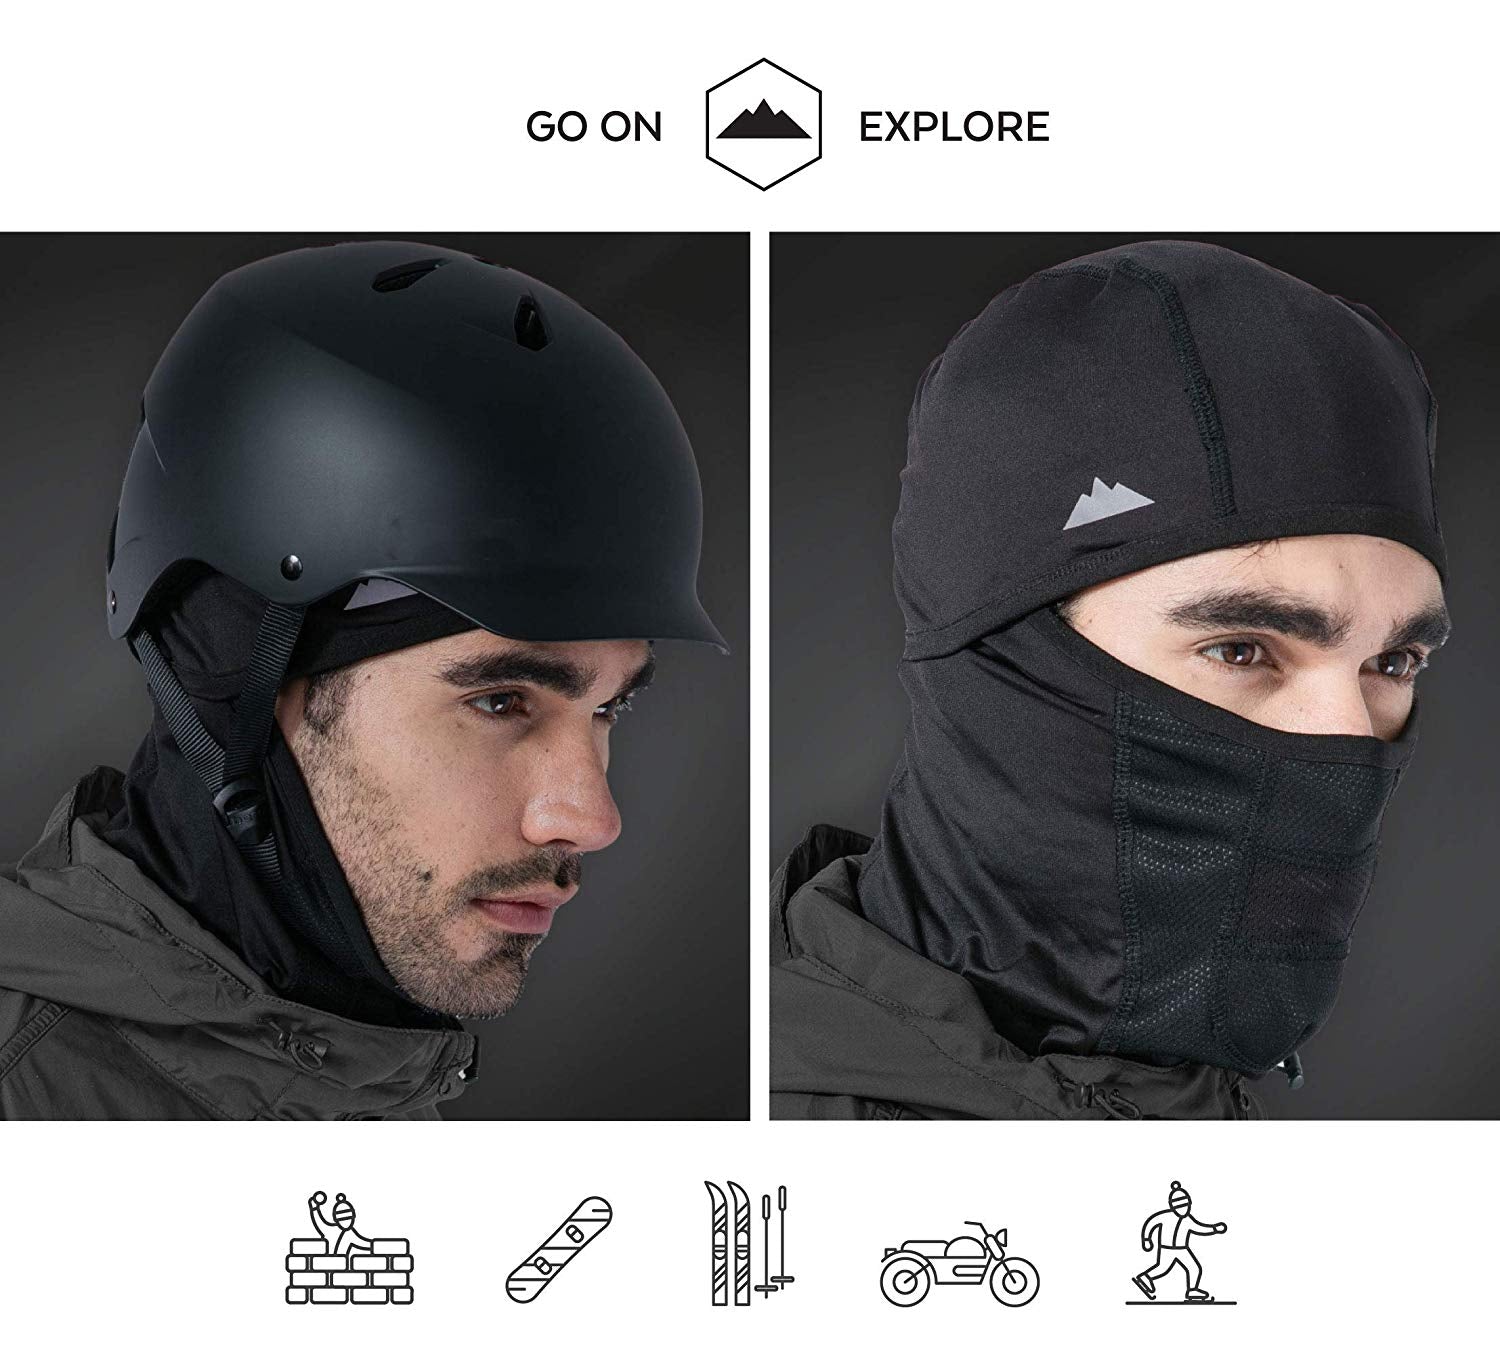 Tough Headwear Balaclava Ski Mask - Winter Face Mask India